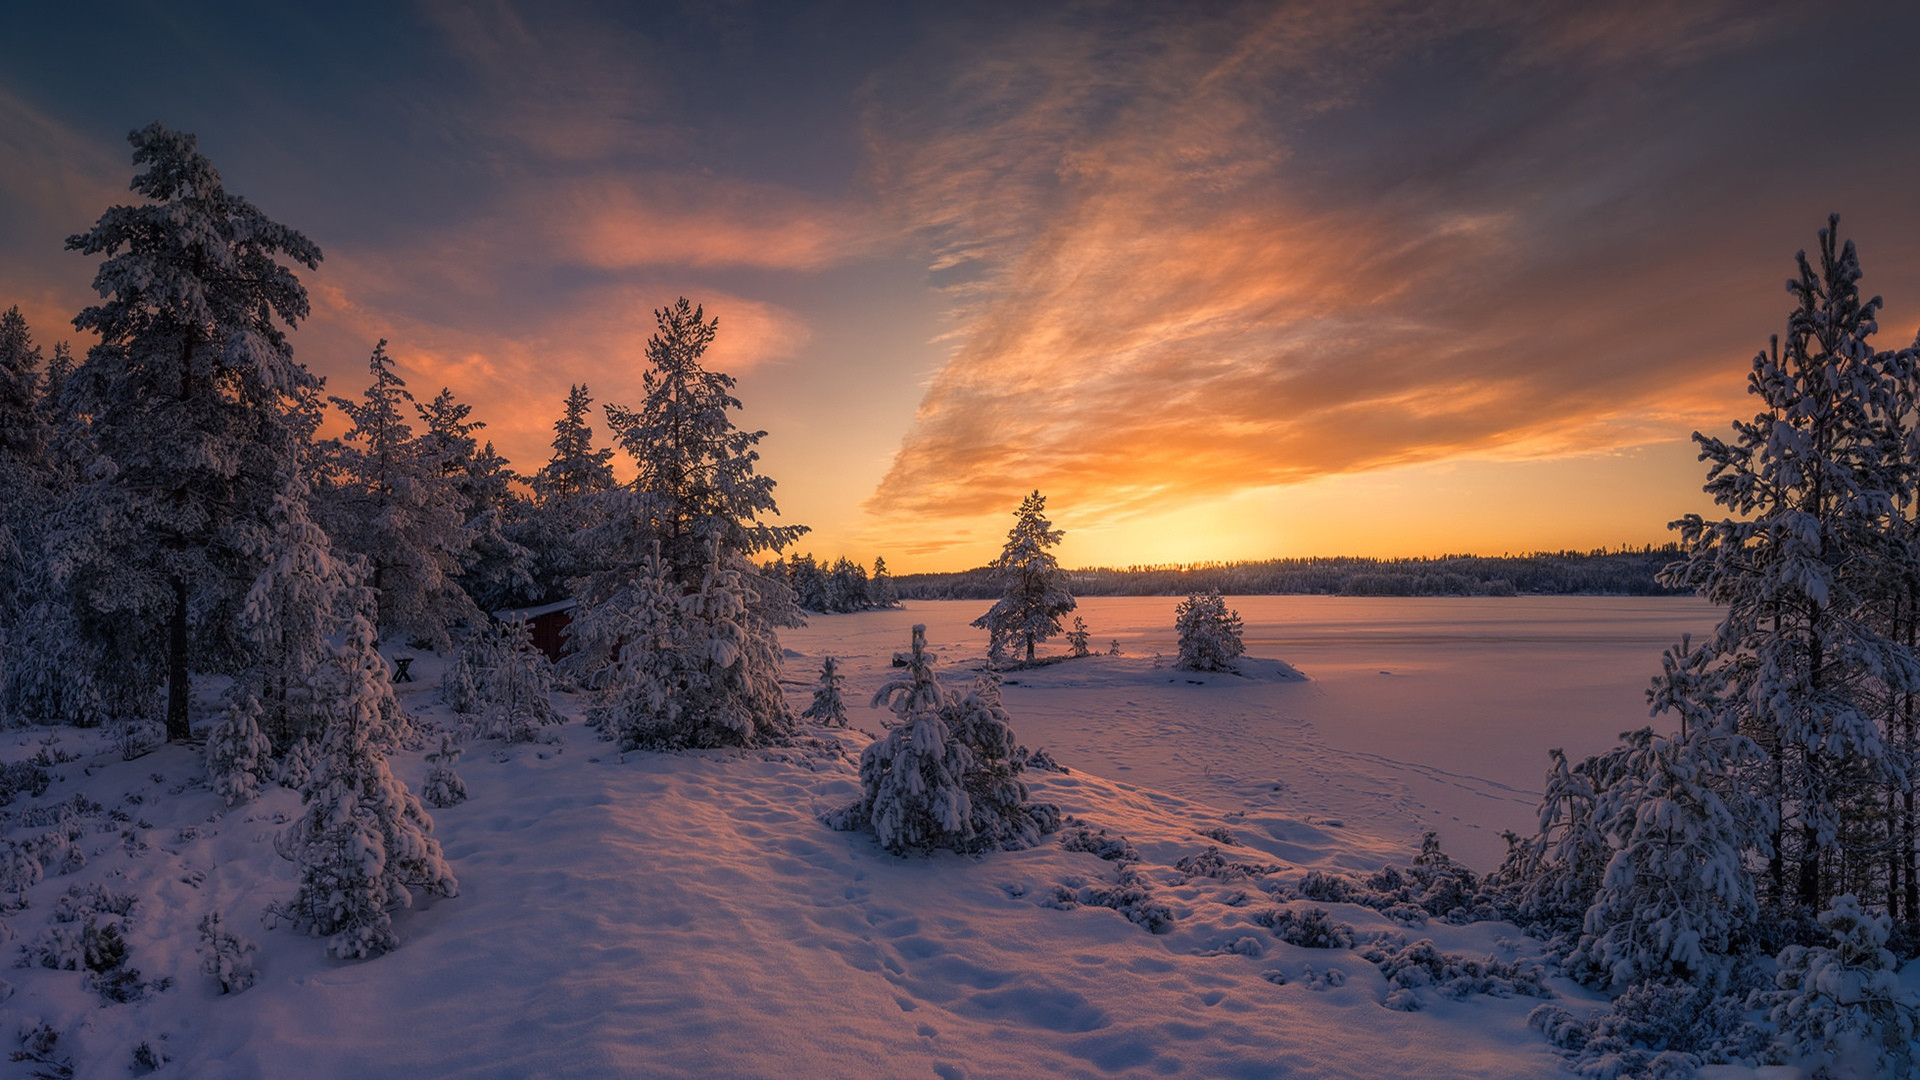 General 1920x1080 Norway winter nature sunset snow frozen lake pine trees